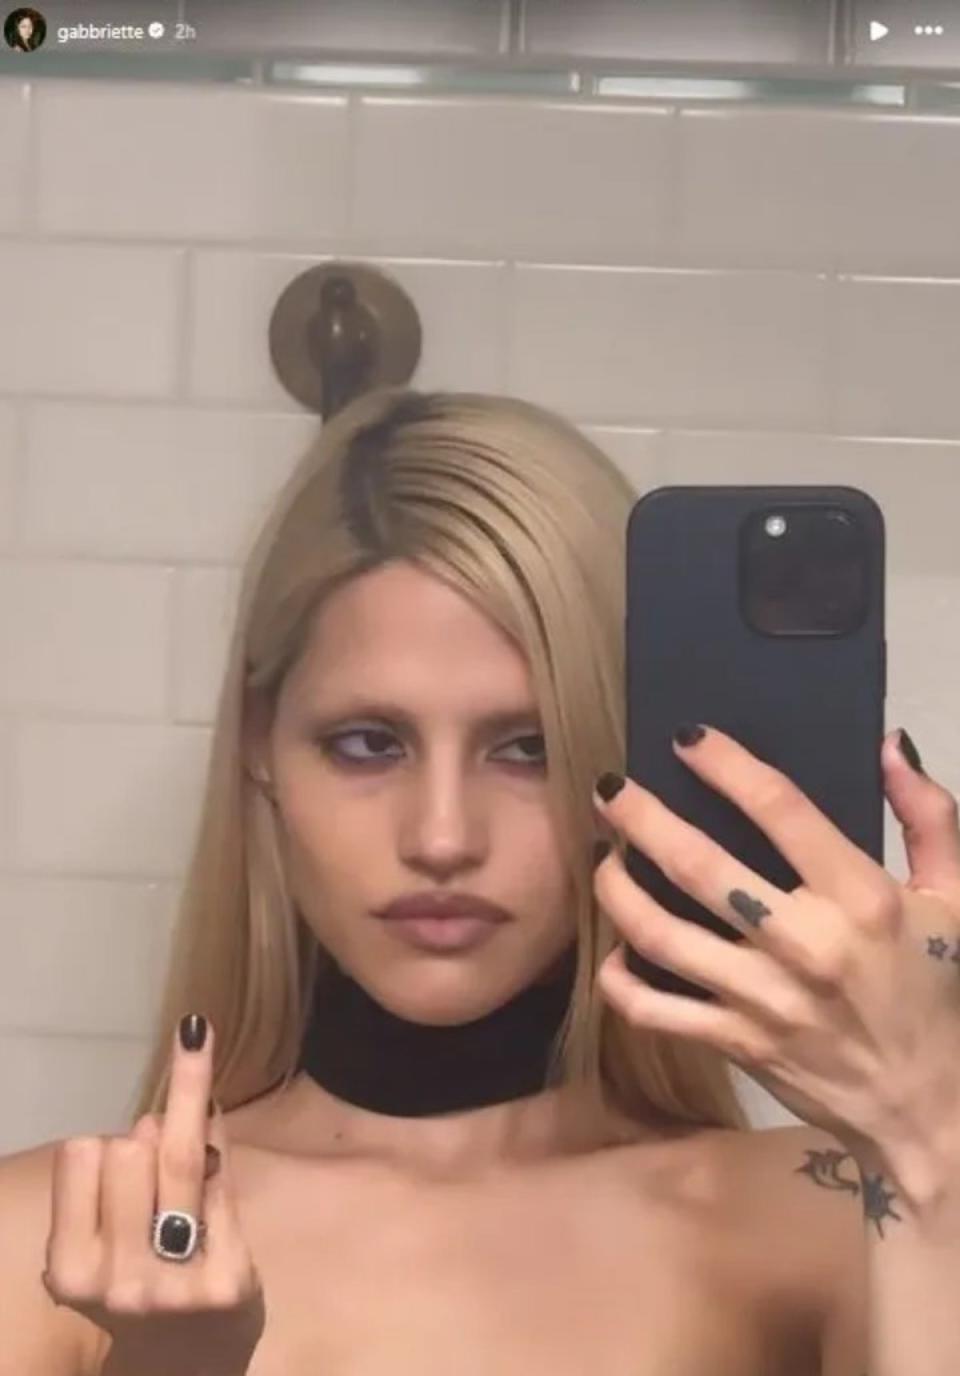 The model shared a bathroom selfie showcasing the ring (Instagram/Gabriette)